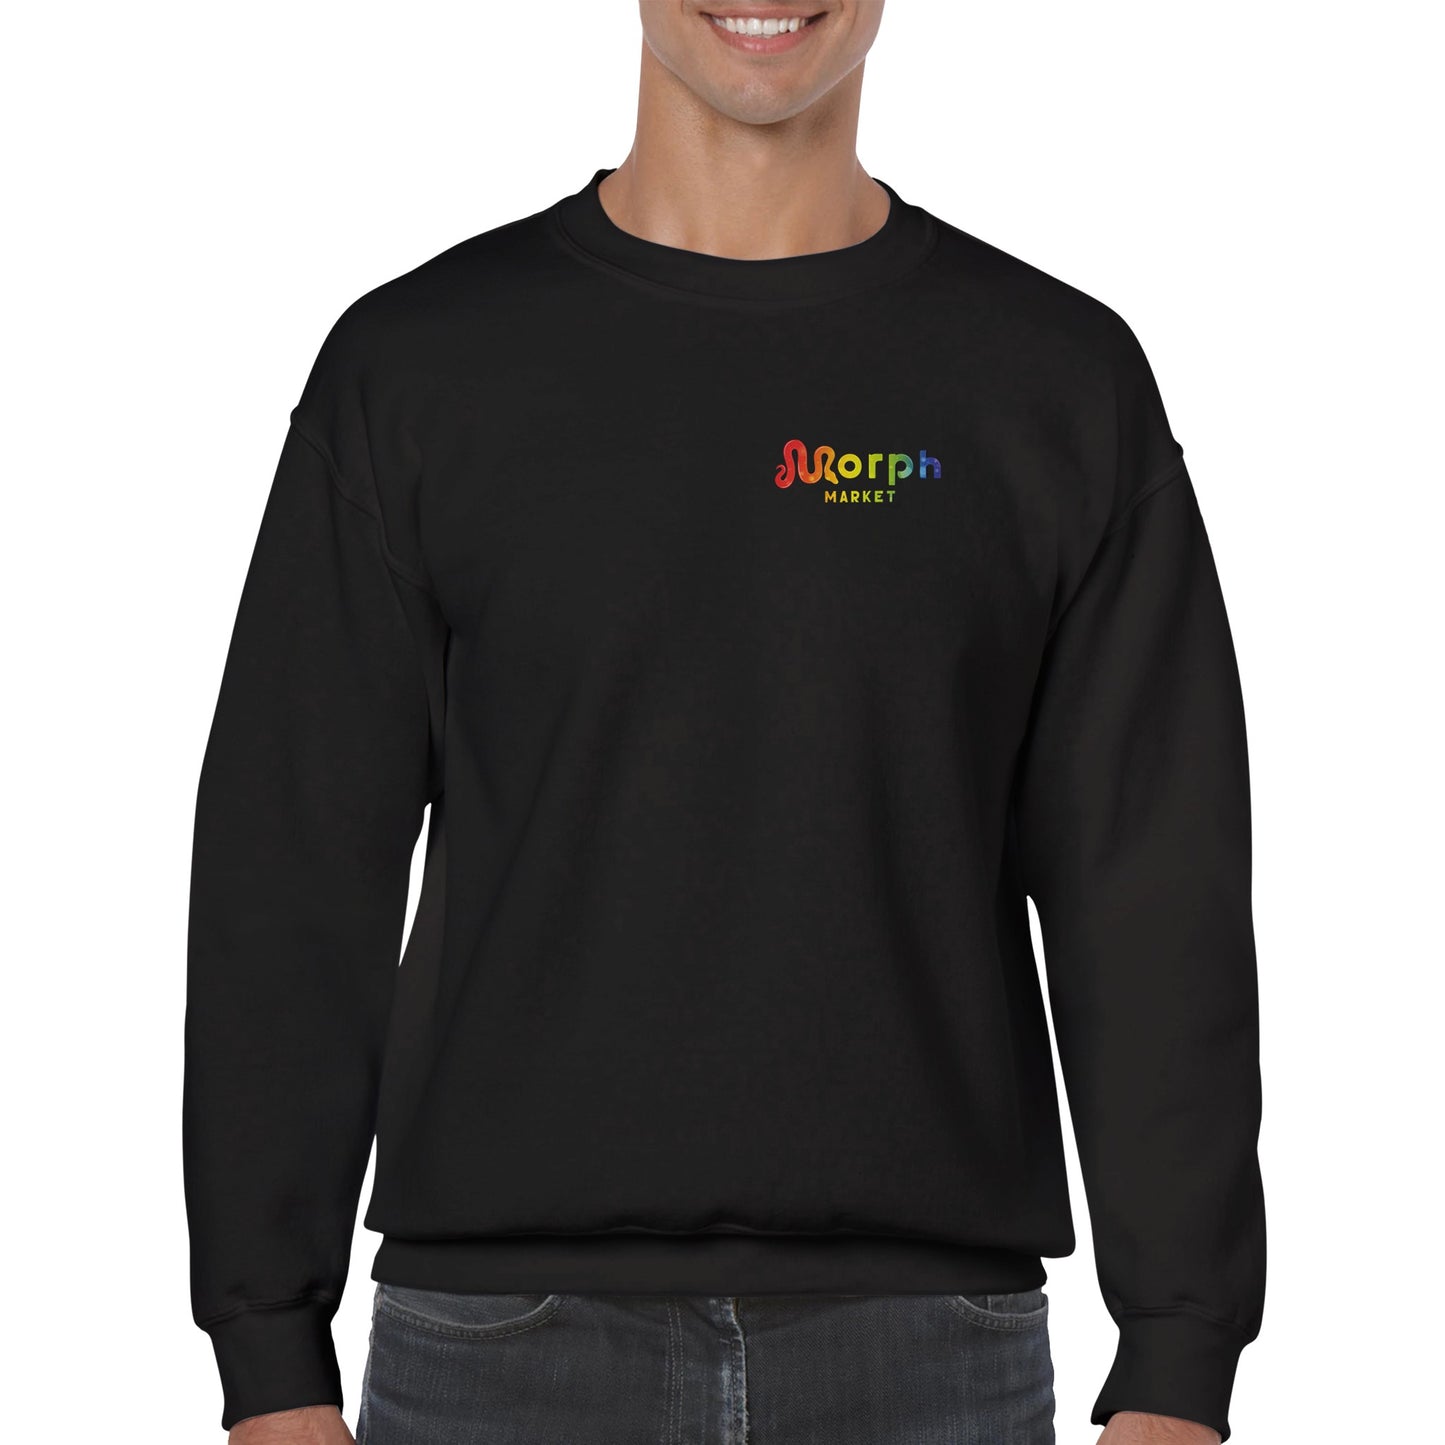 Morph Market (Rainbow Circles) - Classic Unisex Crewneck Sweatshirt